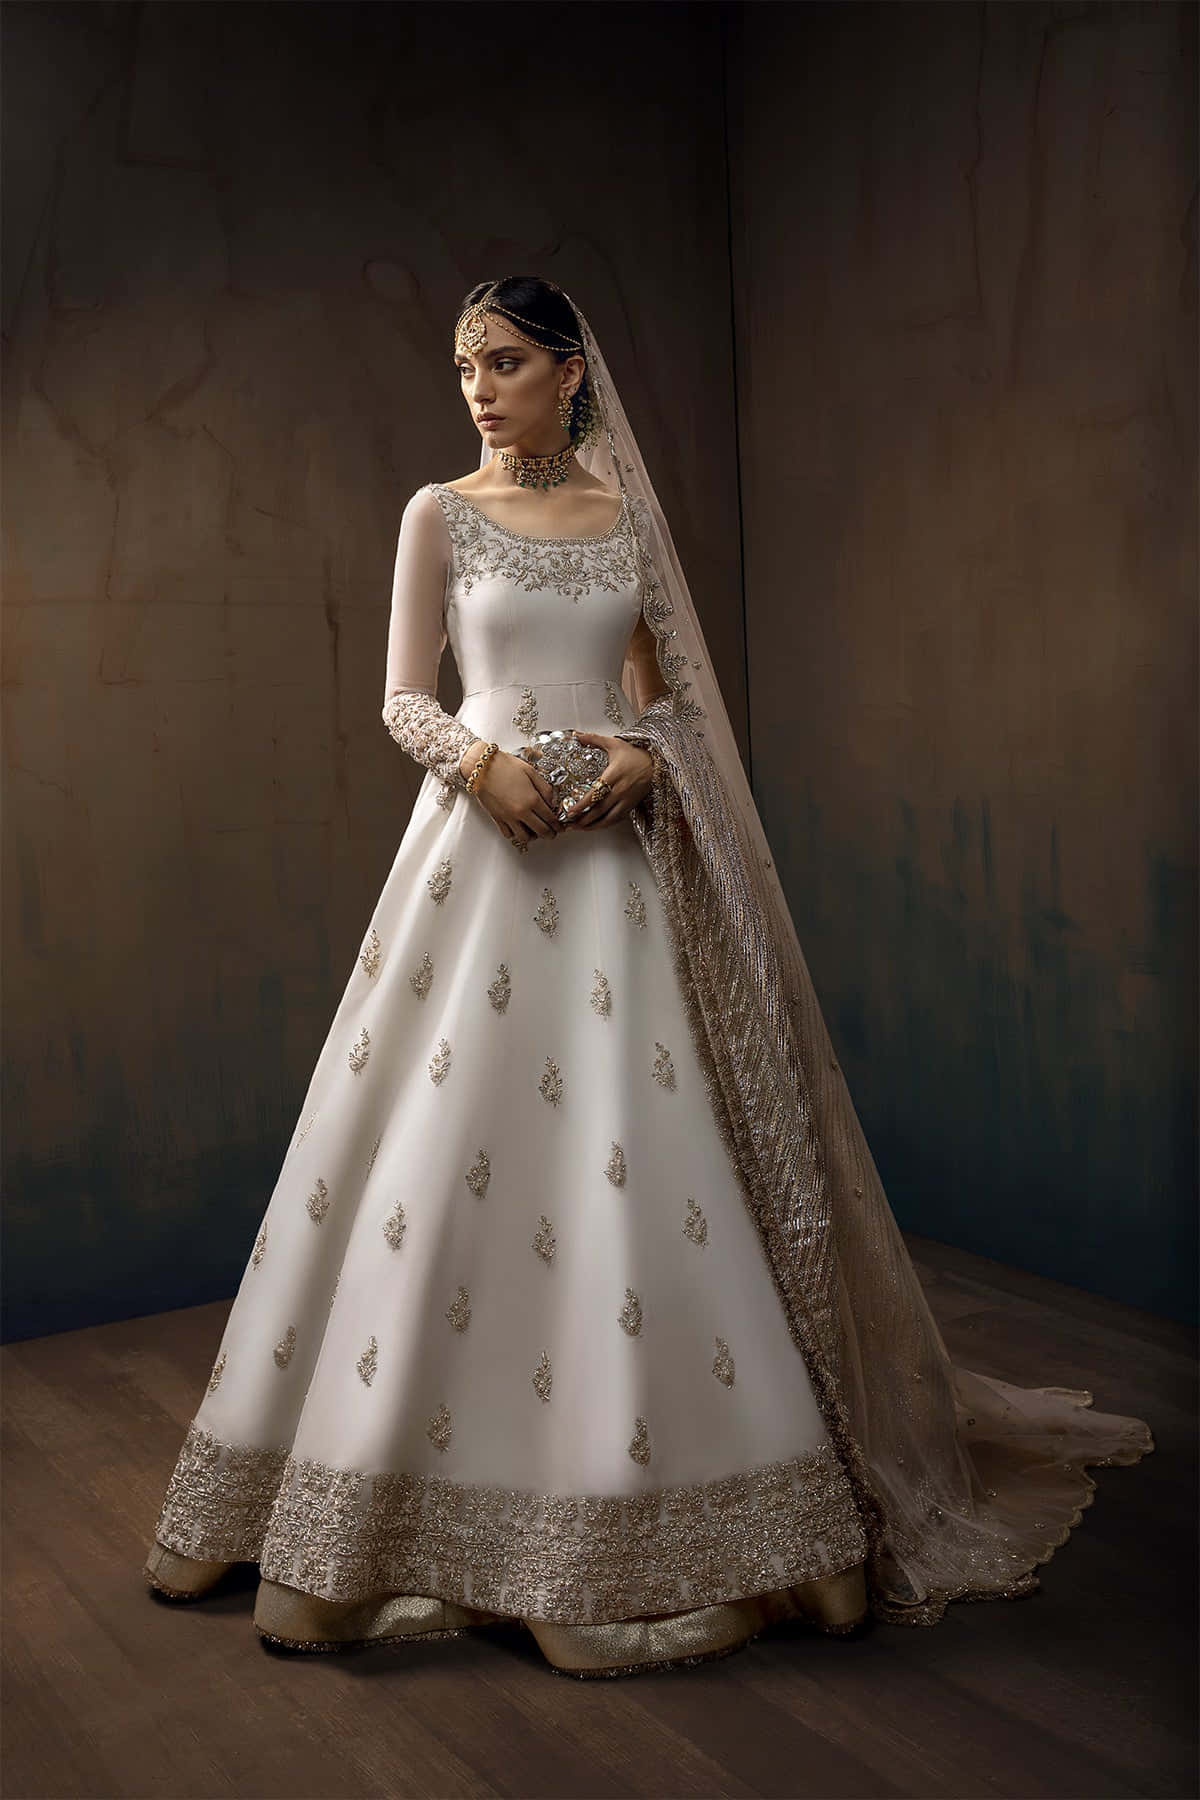 A Bride's Delight - Shining in a Beautiful White Dress Wallpaper